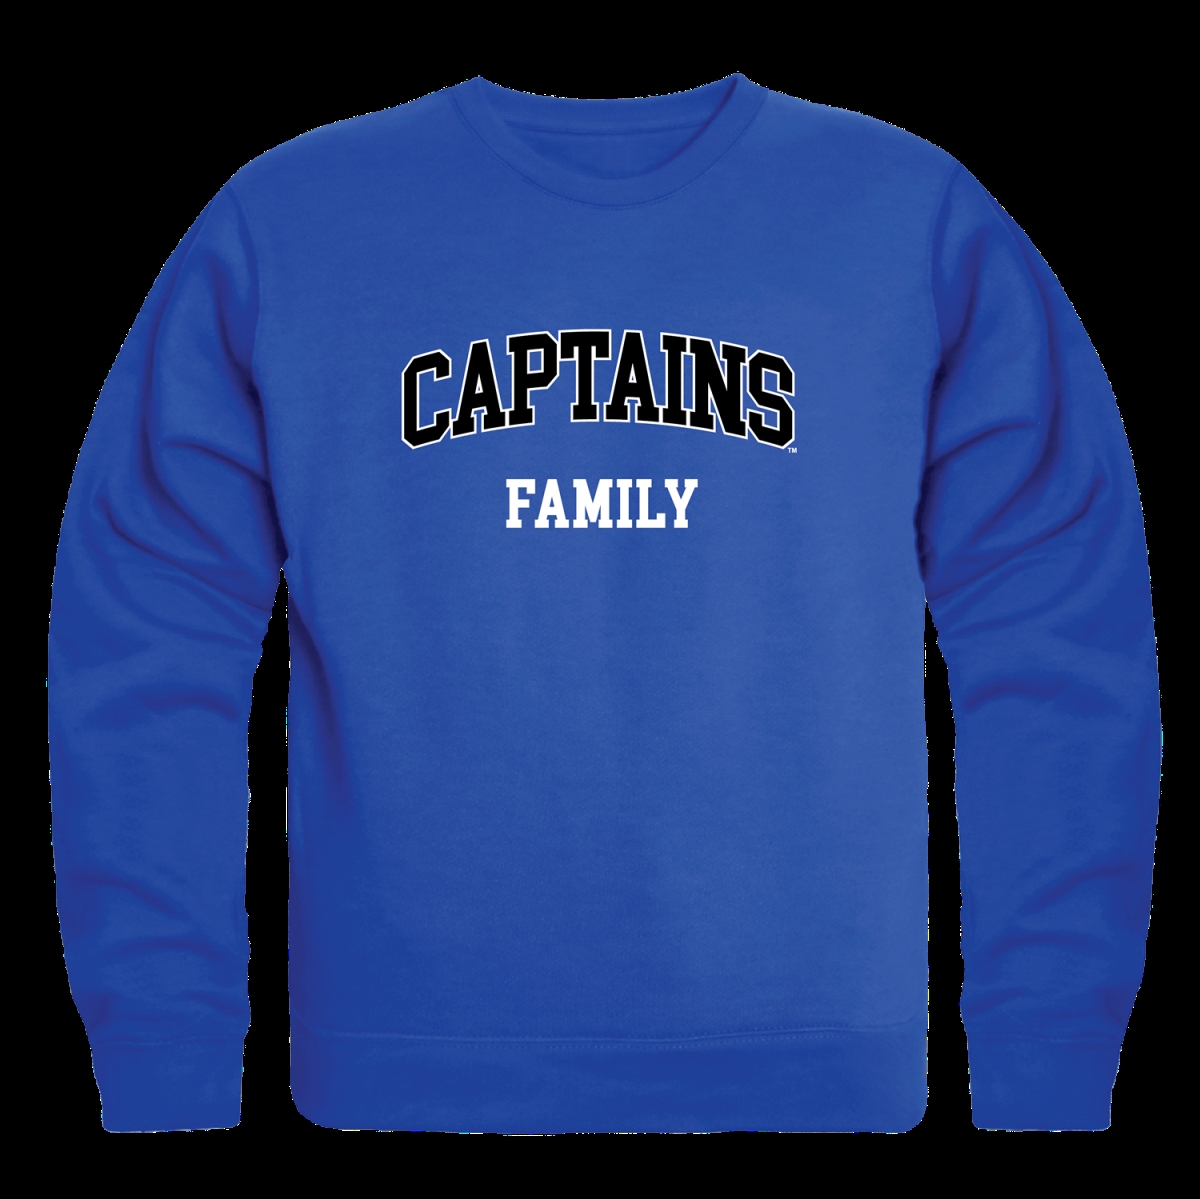 W Republic 572-279-RYL-04 Christopher Newport University Captains Family Crewneck Sweatshirt&#44; Royal - Extra Large